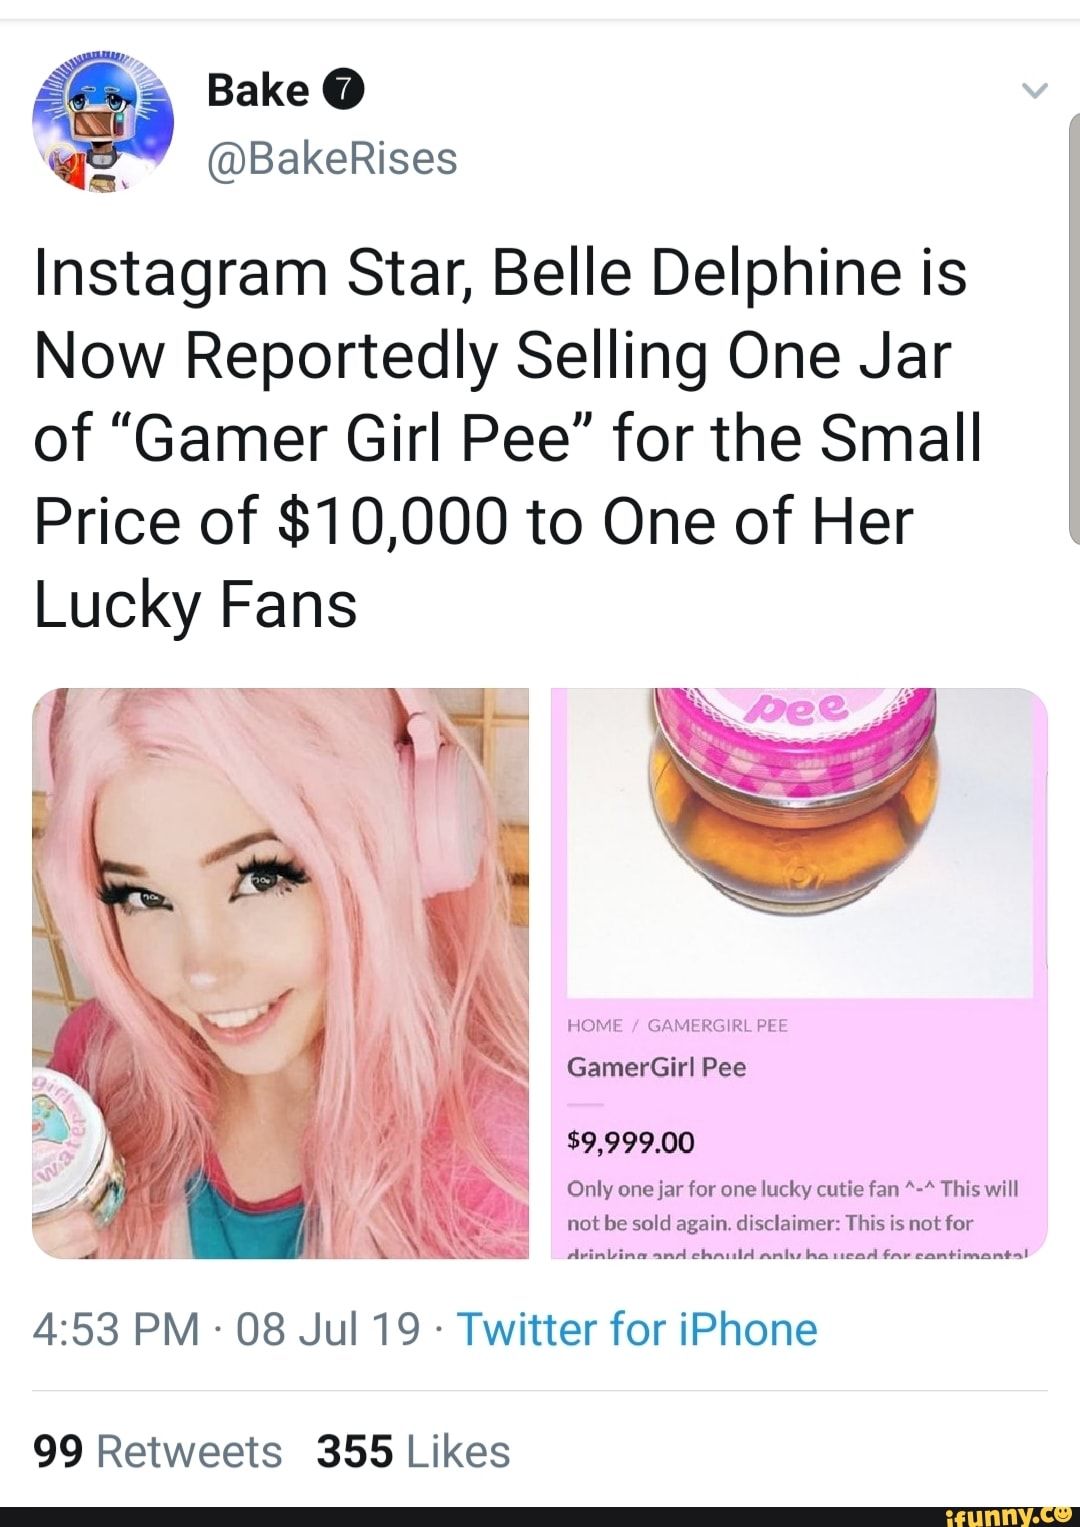 cesar bermeo recommends Gamer Girl Pee